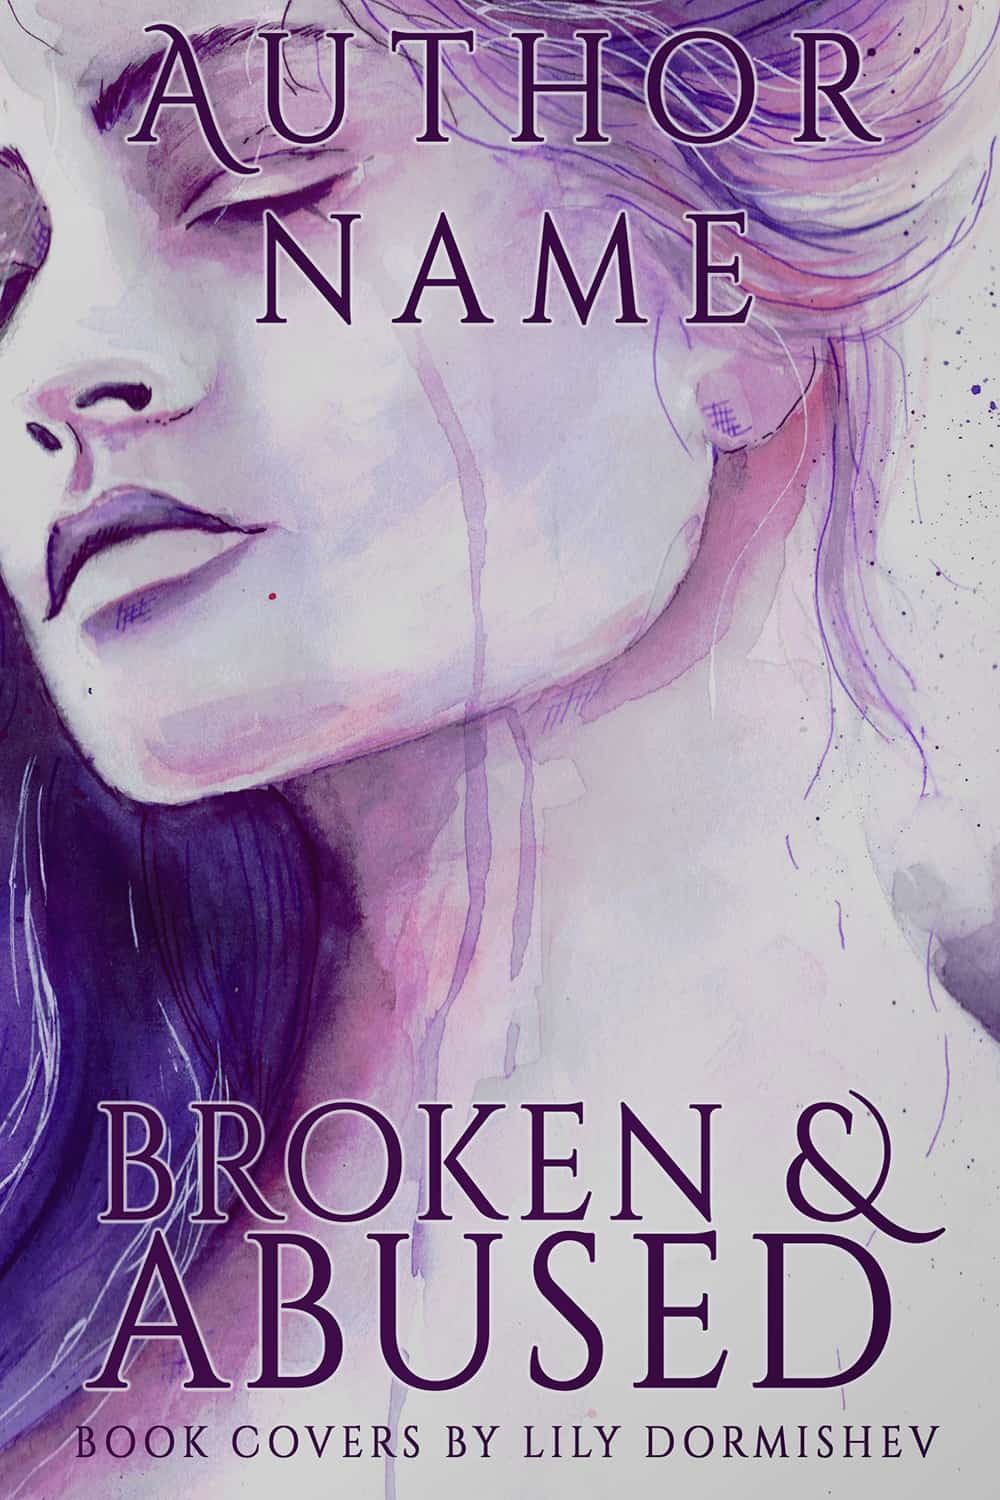 Broken Women - The Book Cover Designer